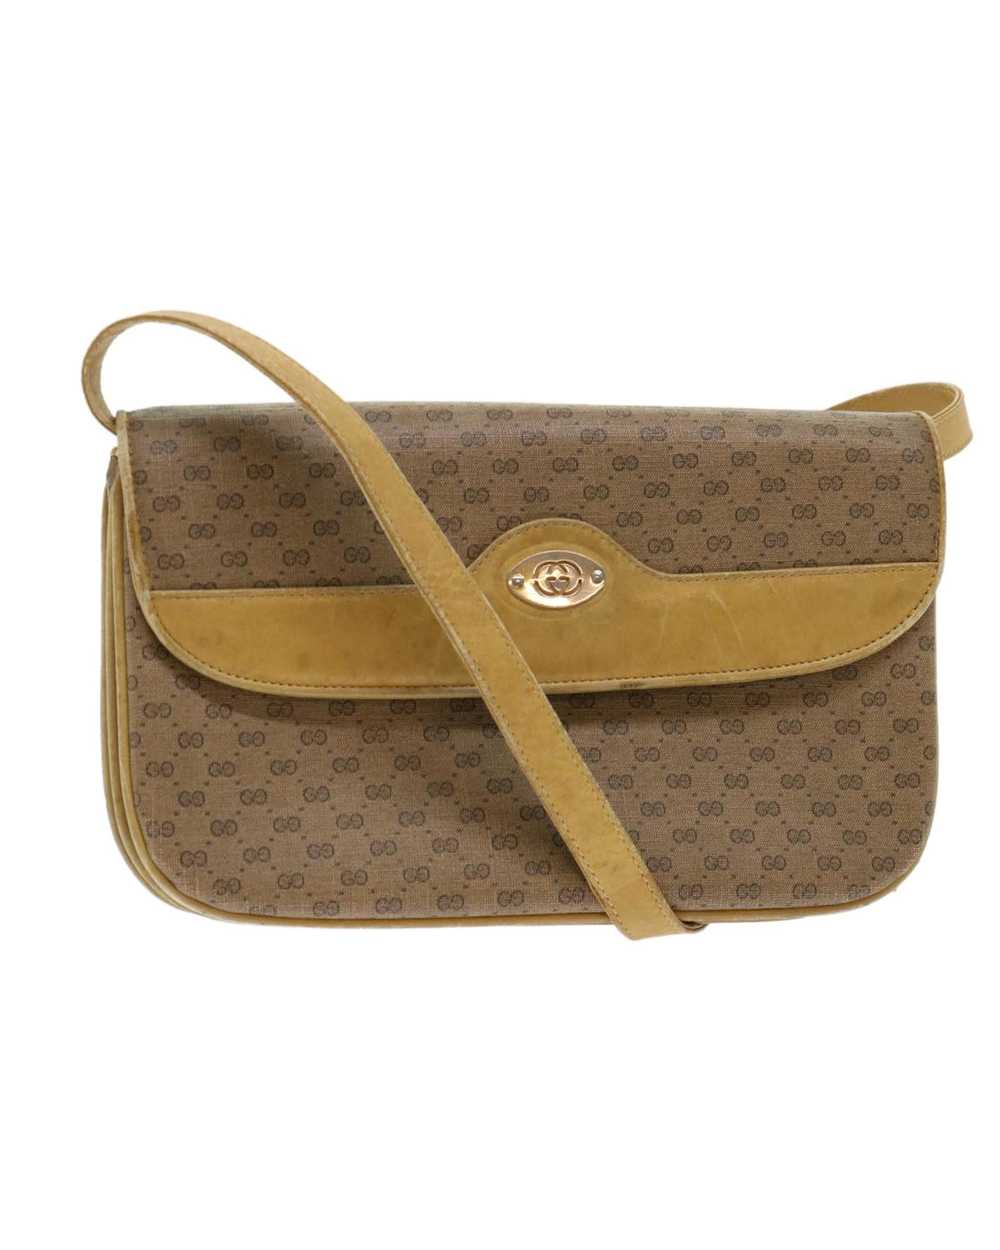 Gucci Luxury Gucci Beige Canvas Shoulder Bag - image 1